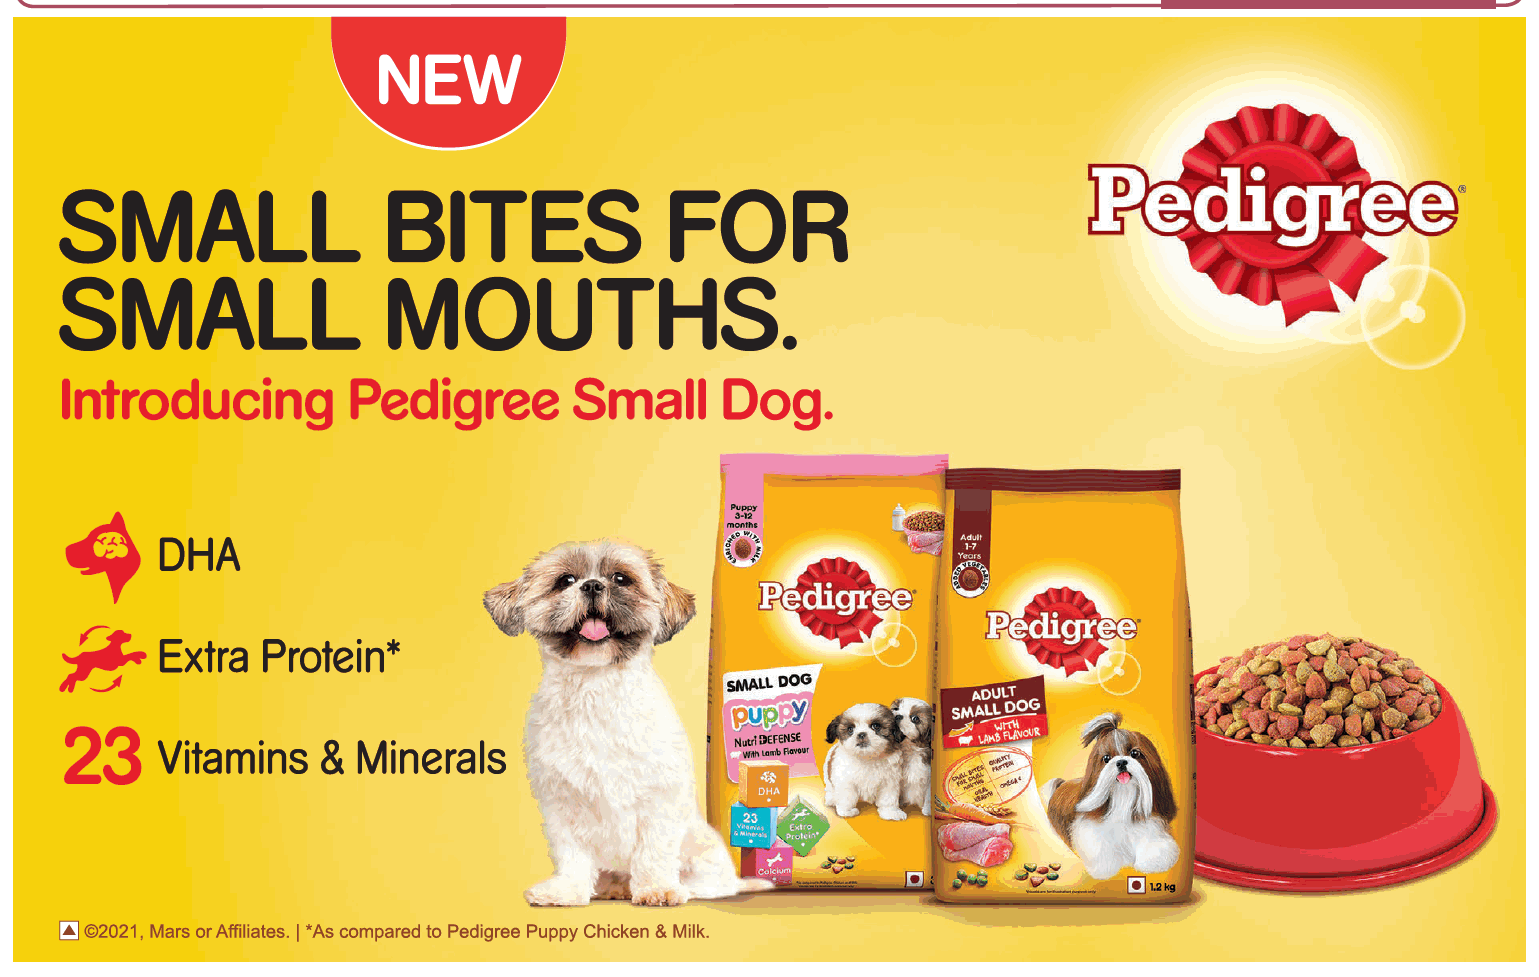 pedigree-new-all-bites-for-small-mouths-pedigree-small-dog-ad-toi-mumbai-11-7-2021